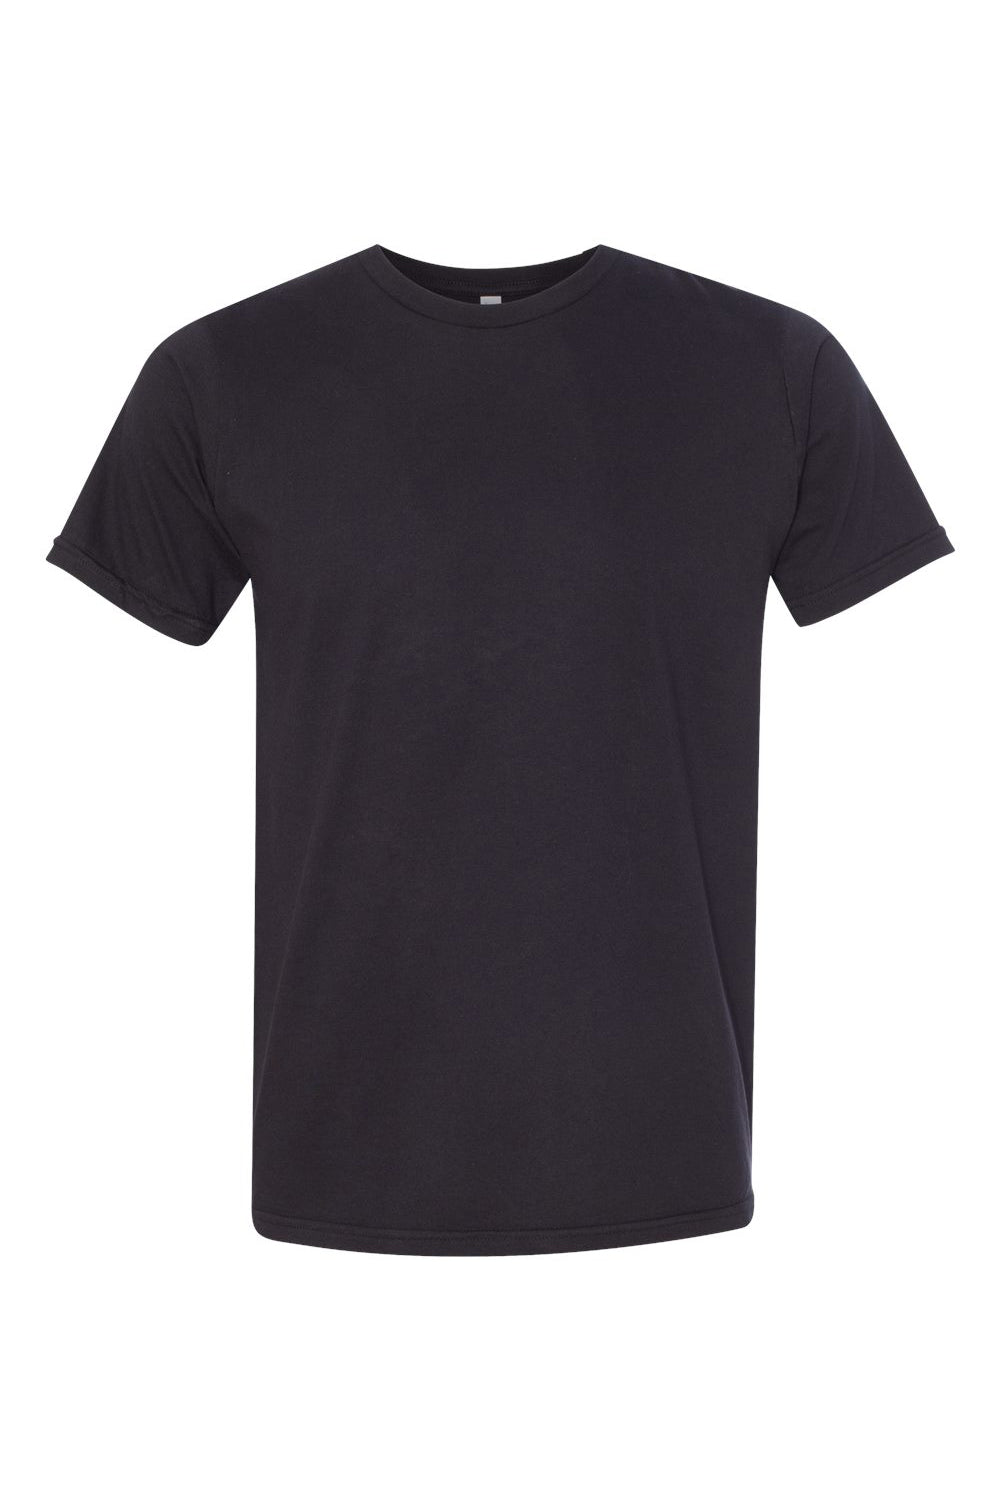 Bayside 5000 Mens USA Made Short Sleeve Crewneck T-Shirt Black Flat Front